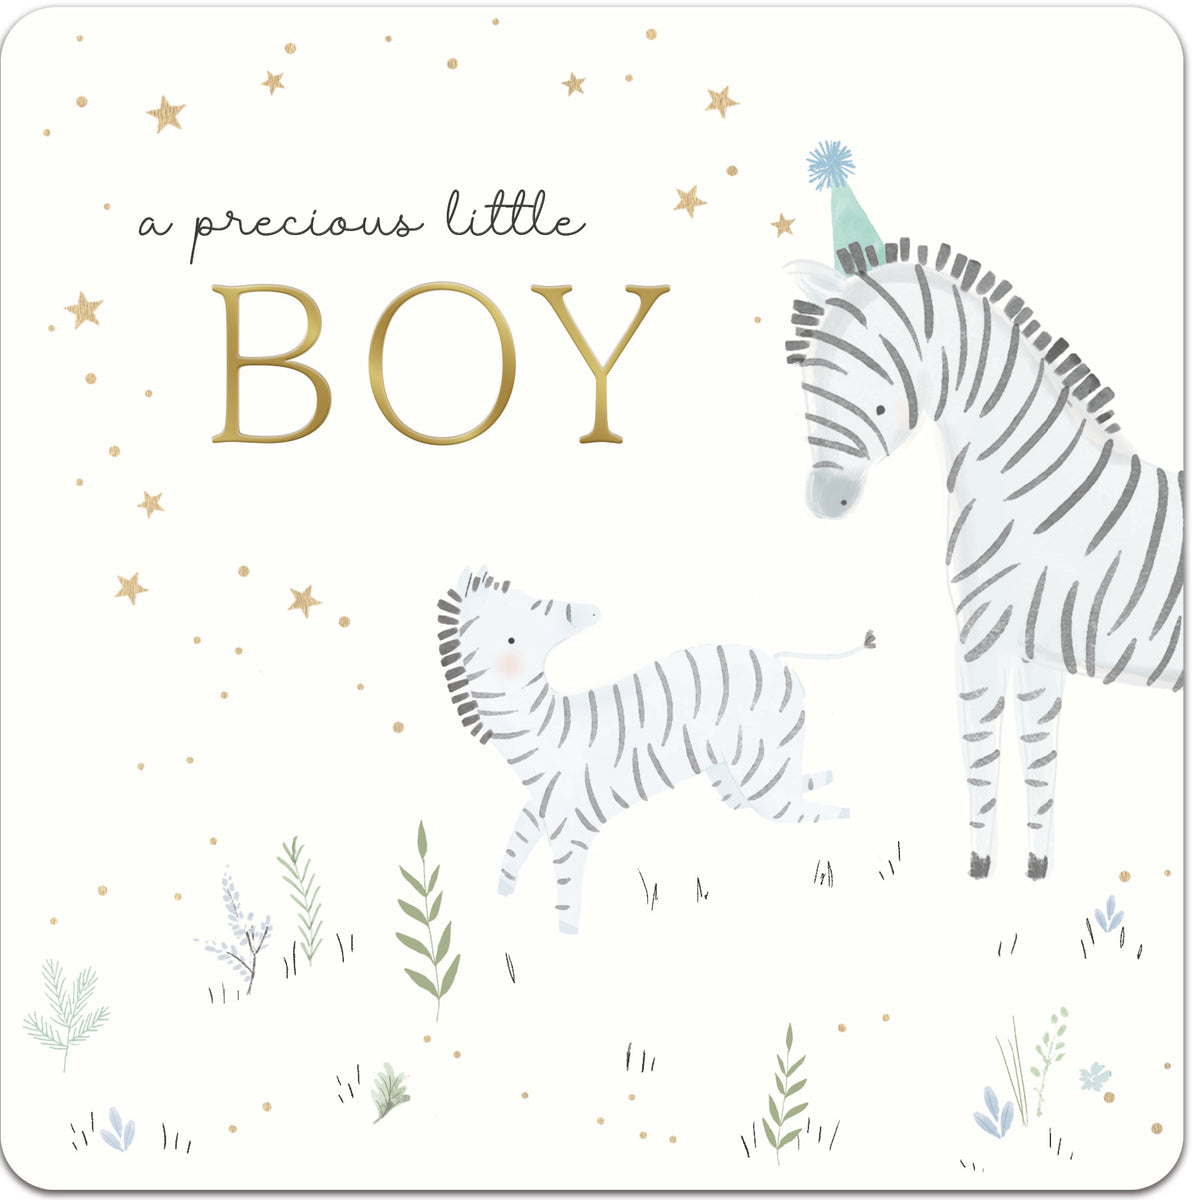 Zebras Precious Little Boy New Baby Card from Penny Black